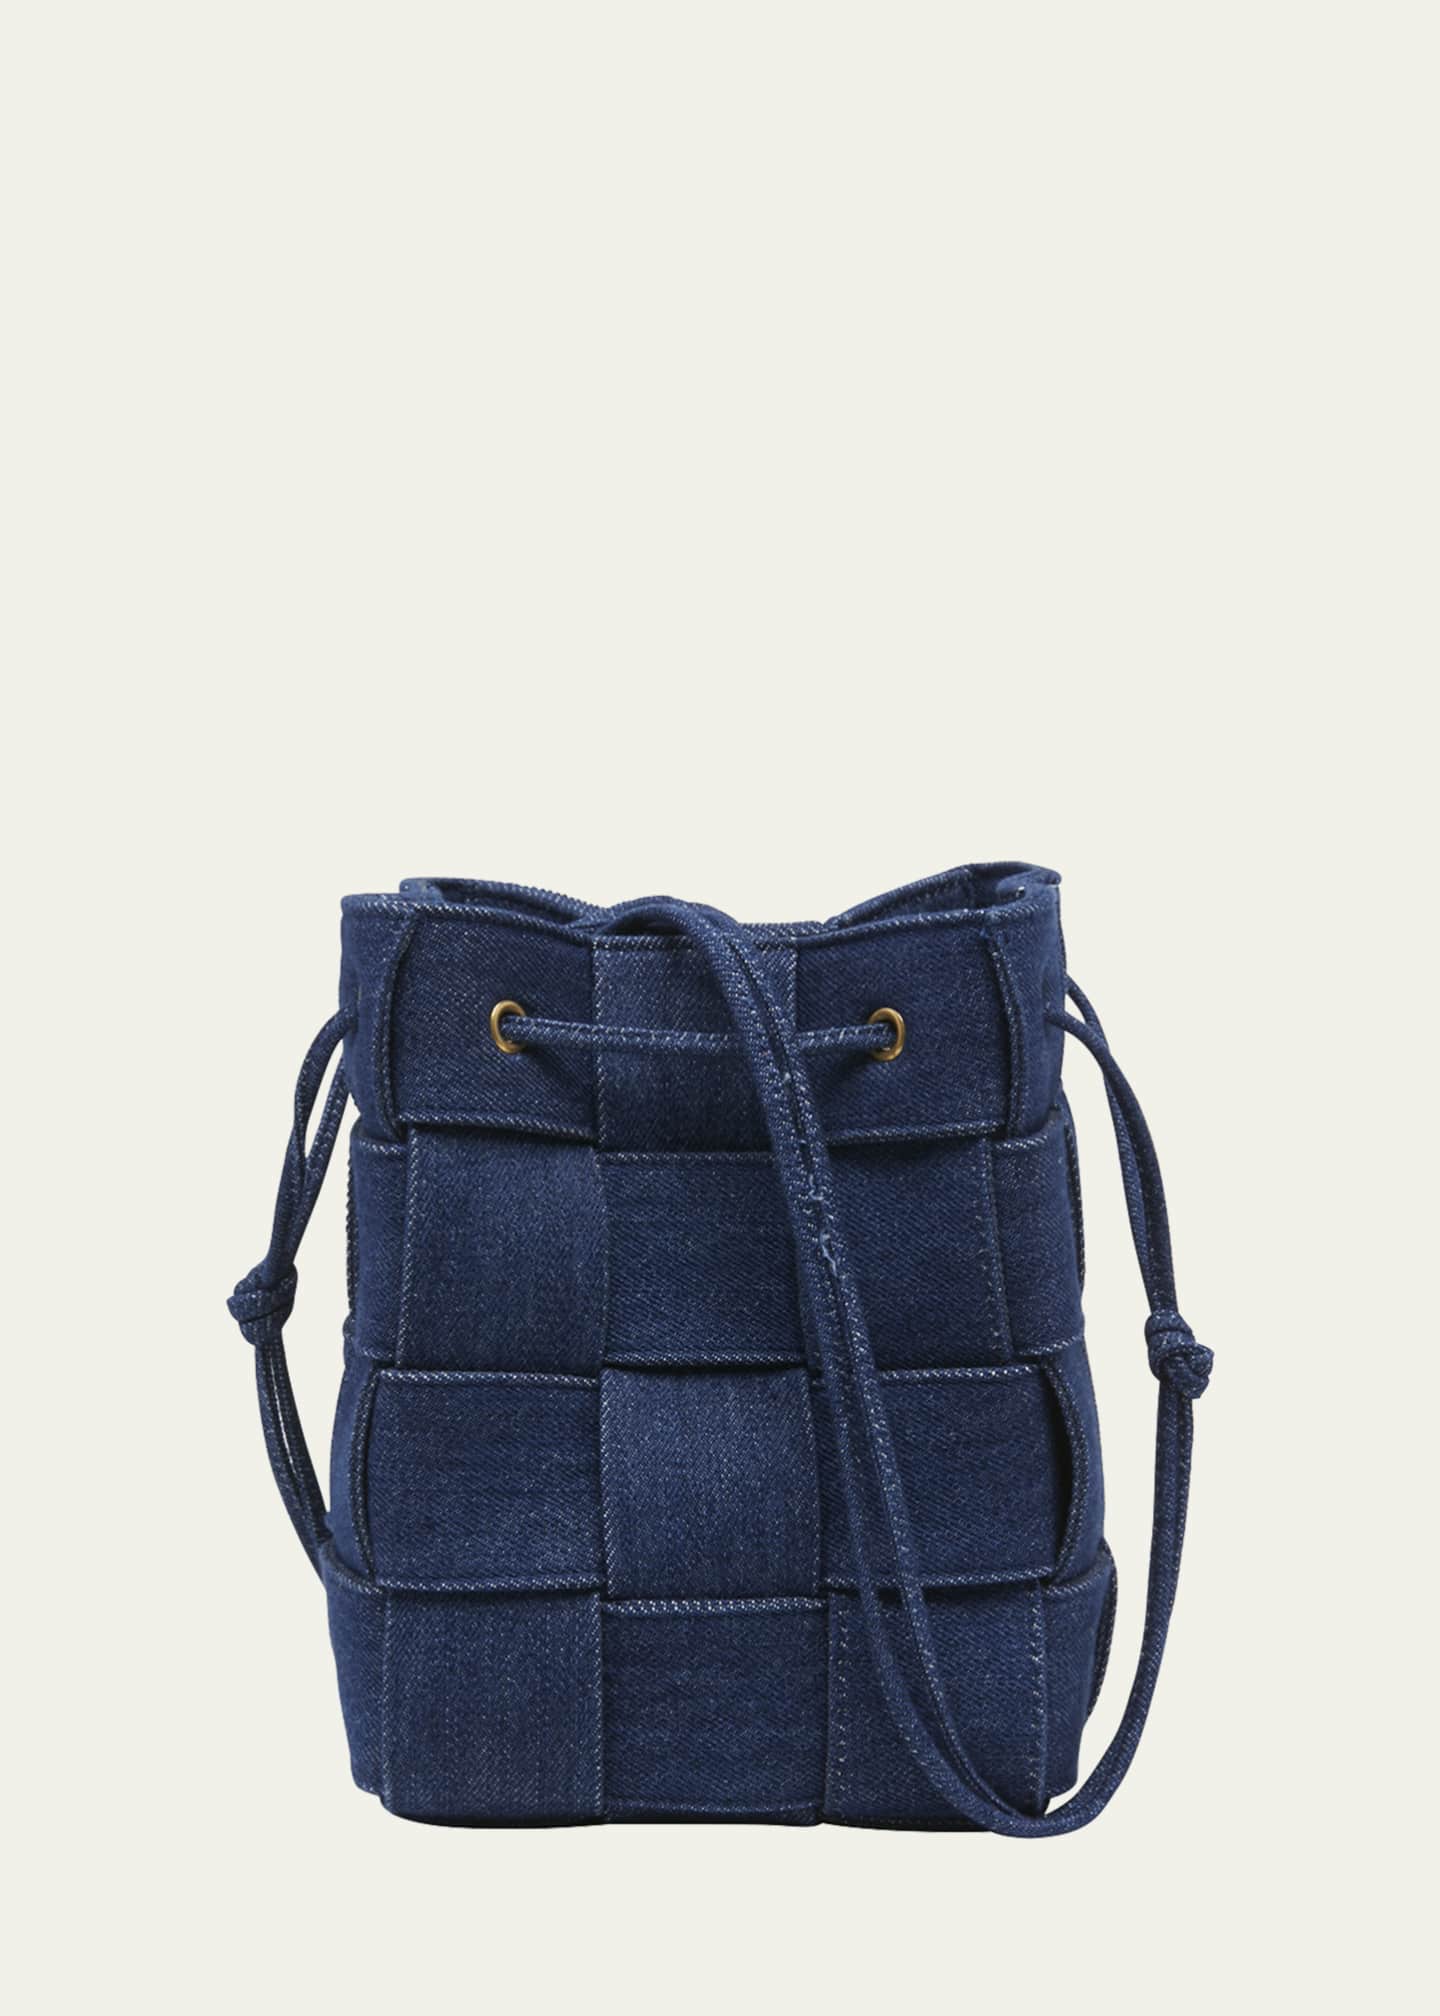 Casual Messenger Bag - Denim Blue - The Bags Garden